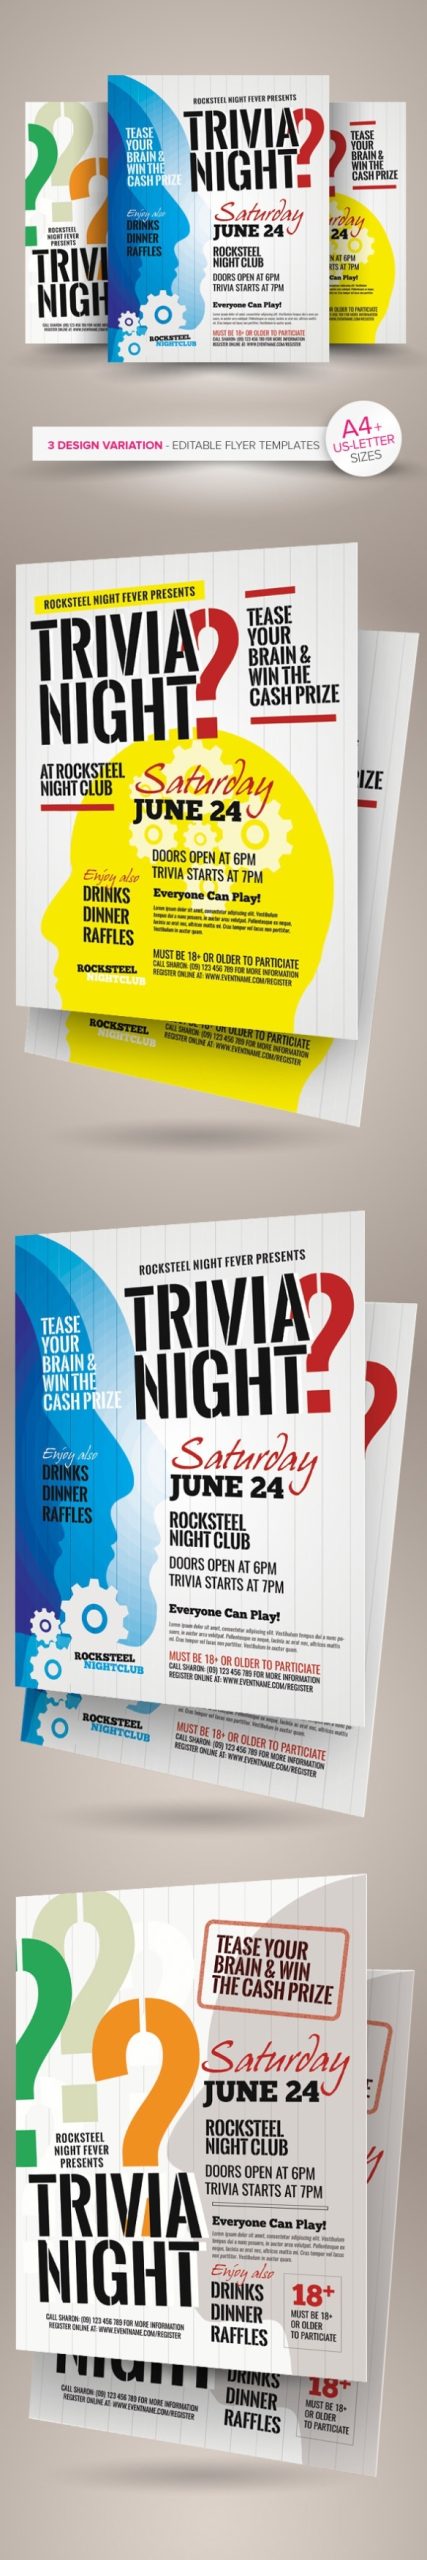 Trivia Night Flyer Templates On Behance Intended For Free Trivia Night Flyer Template